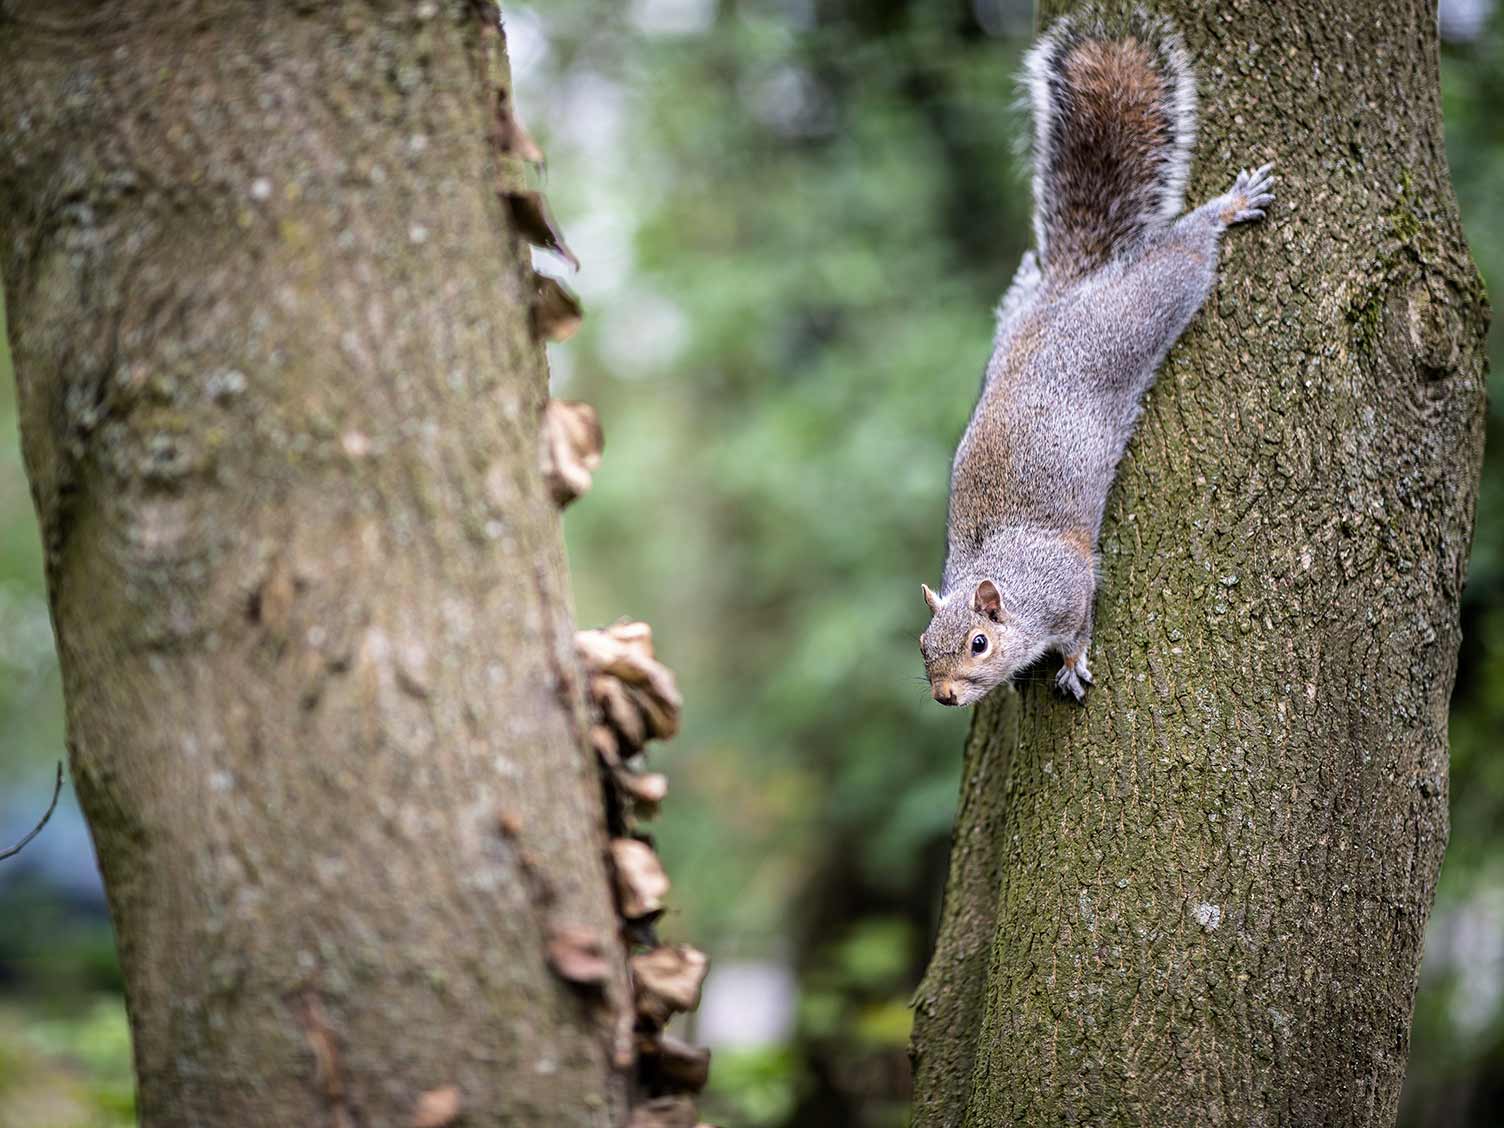 Grey squirrel walking down a tree headfirst